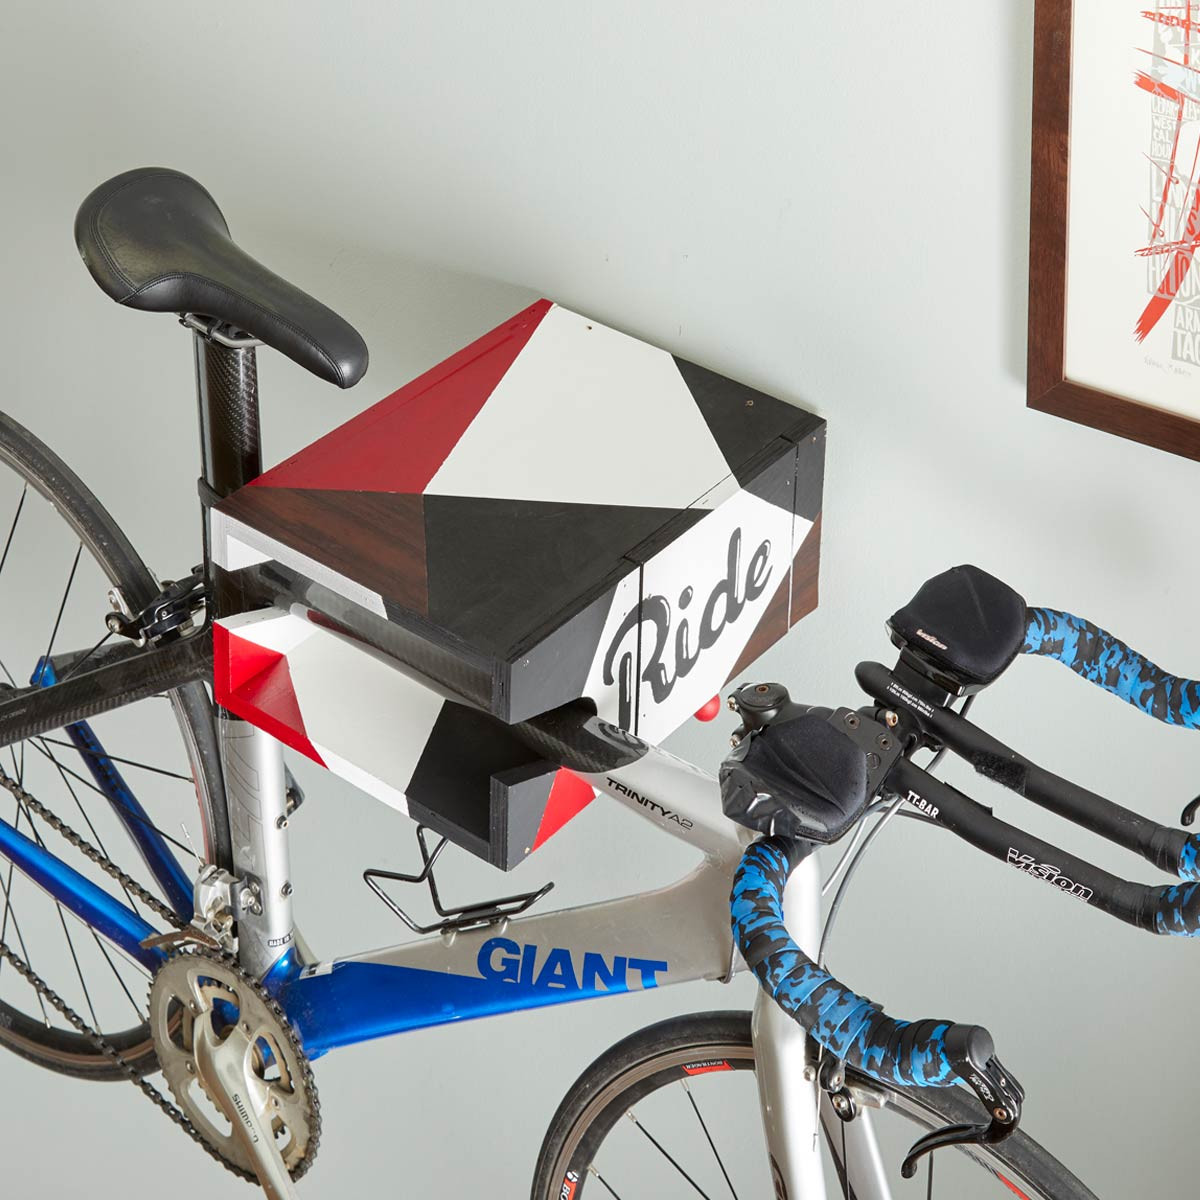 Wall Bike Rack DIY
 How To Build A Wall Mounted Bike Rack With Storage — The